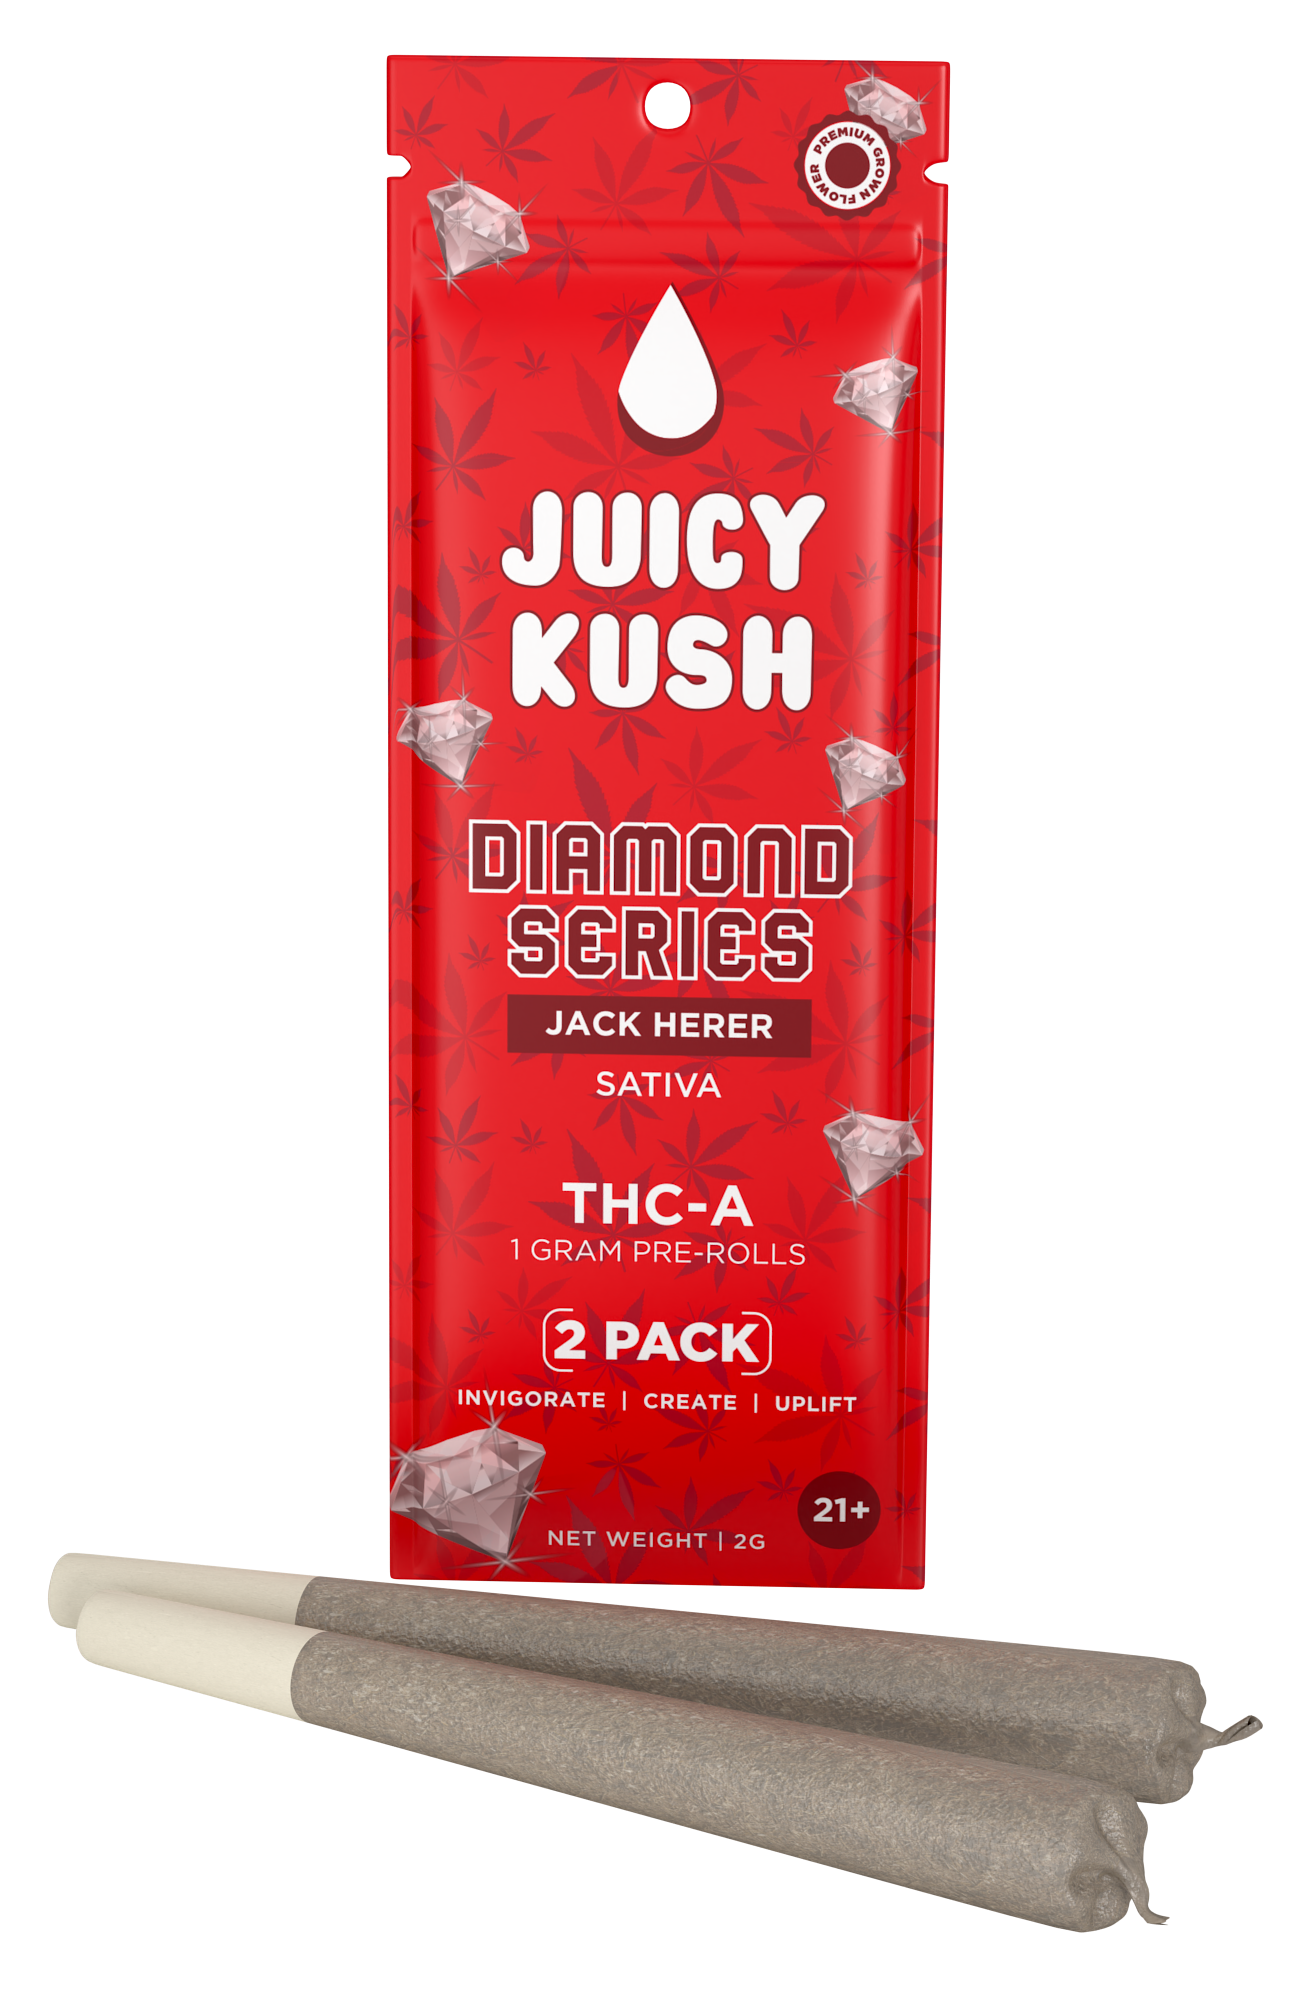 Juicy Kush - THCA - Preroll - 2 Pack - Jack Herer - 1G - Burning Daily